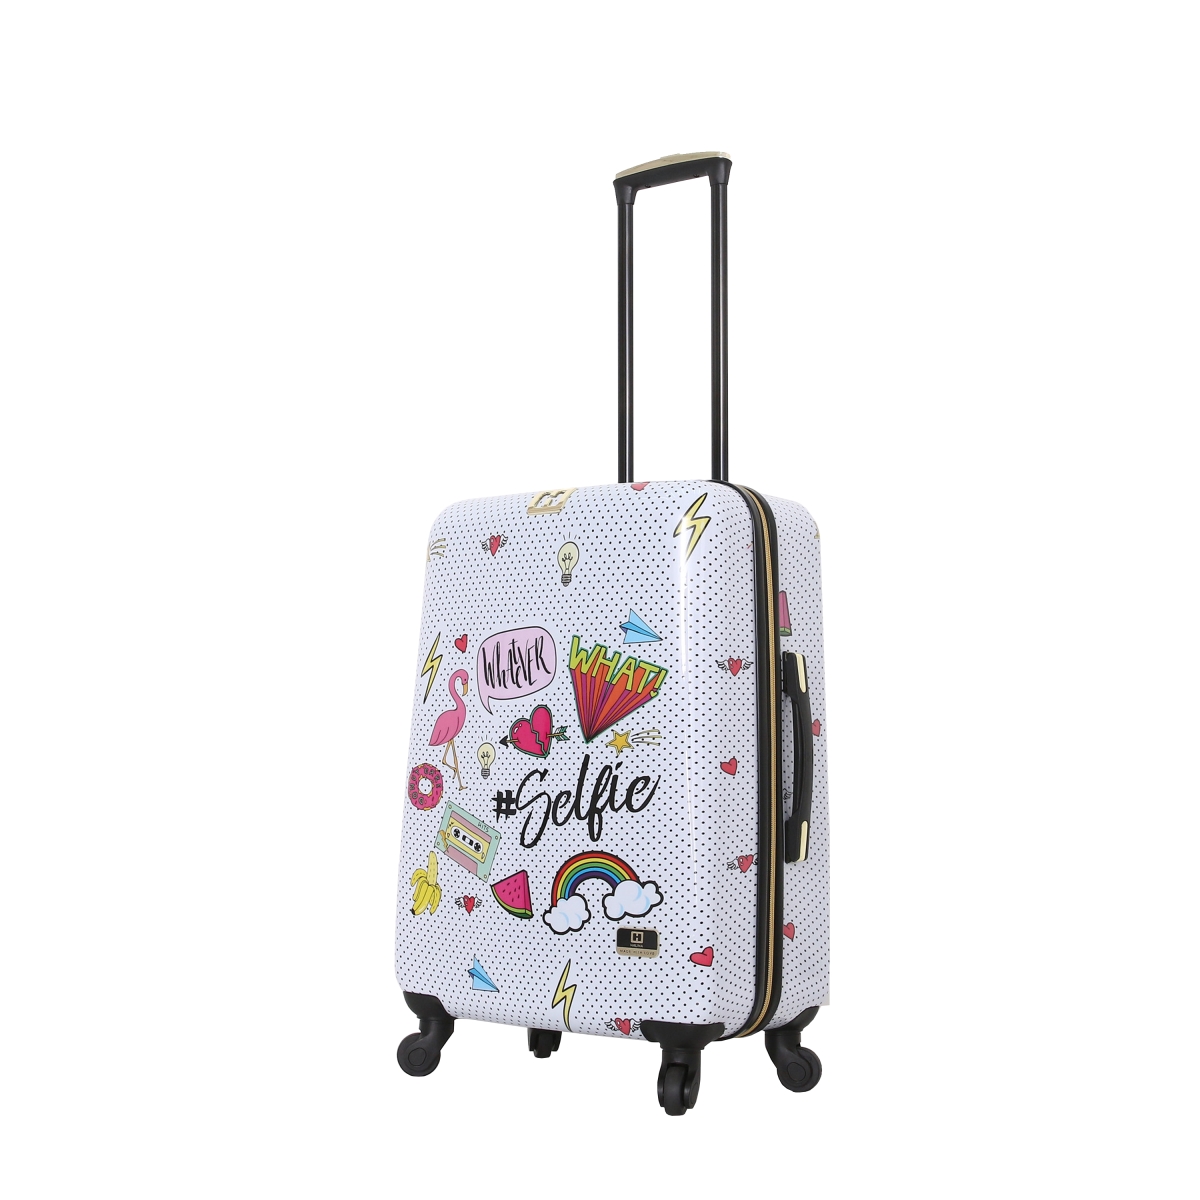 H1010-24-nwenn 24 In. Nikki Chu Whatever Cute Luggage, Multicolor